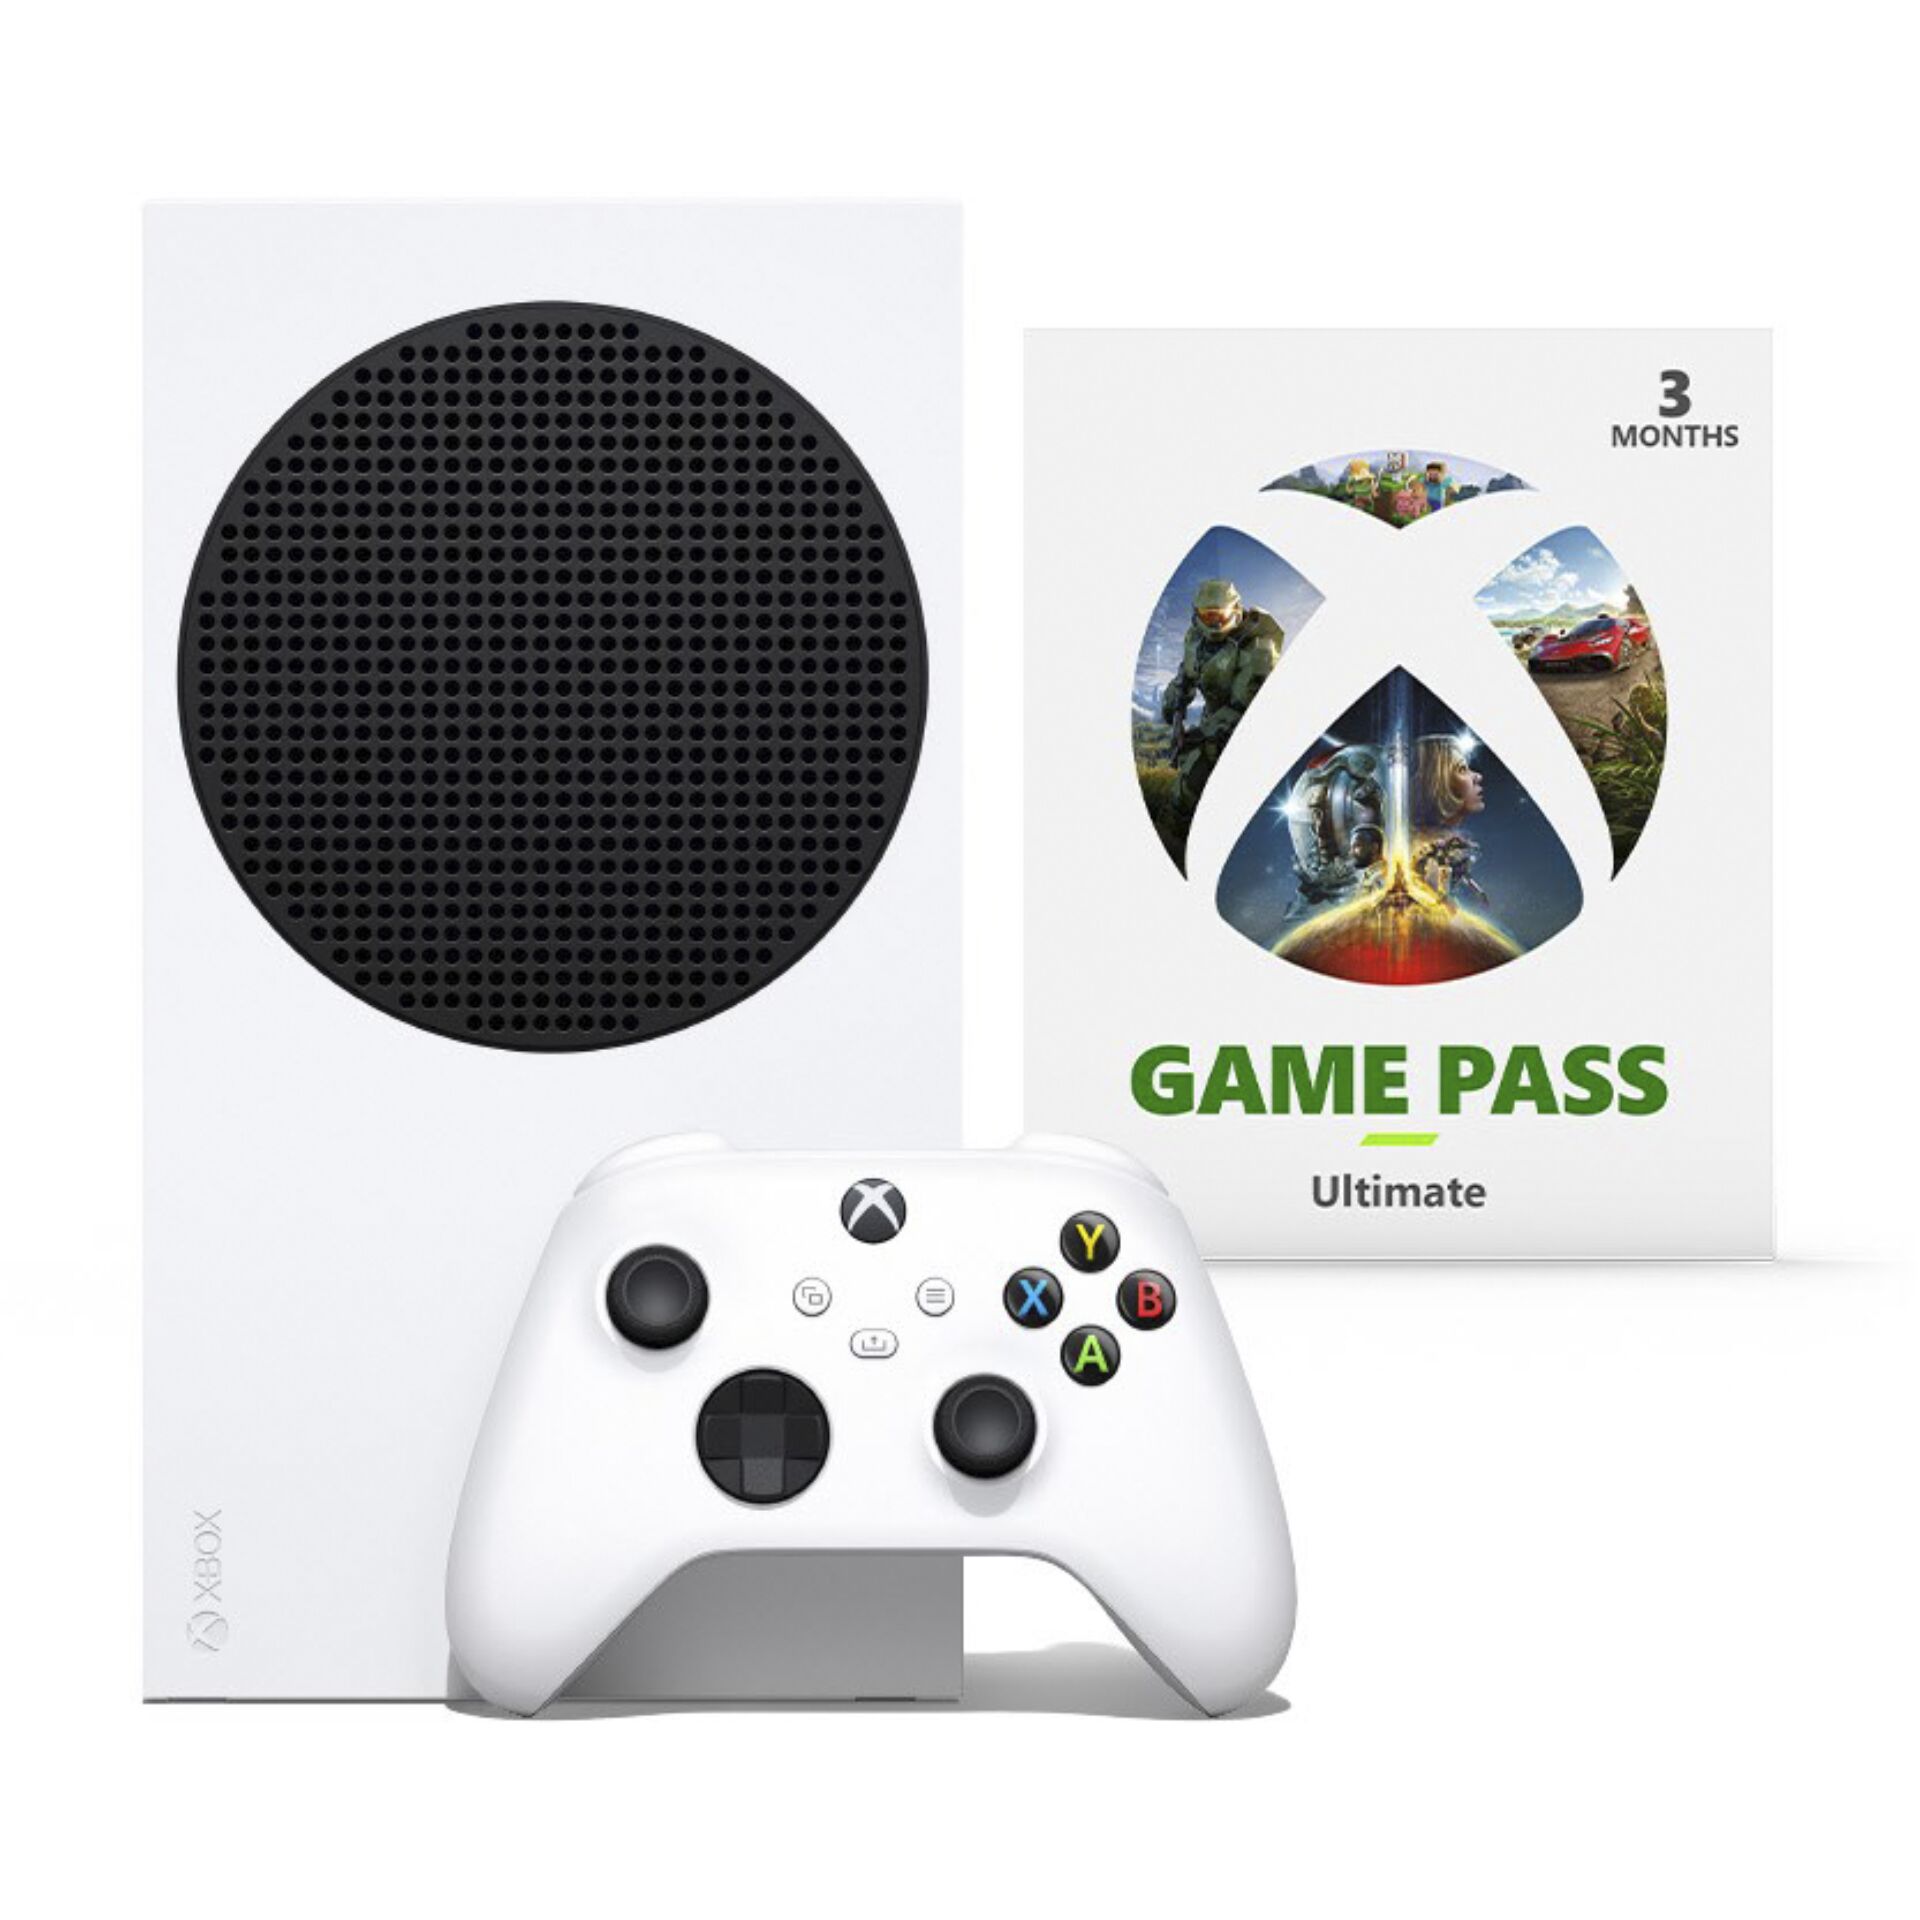 Microsoft Xbox Series S 512 GB + 3 Monatige Game Pass Ultimate Mitgliedschaft